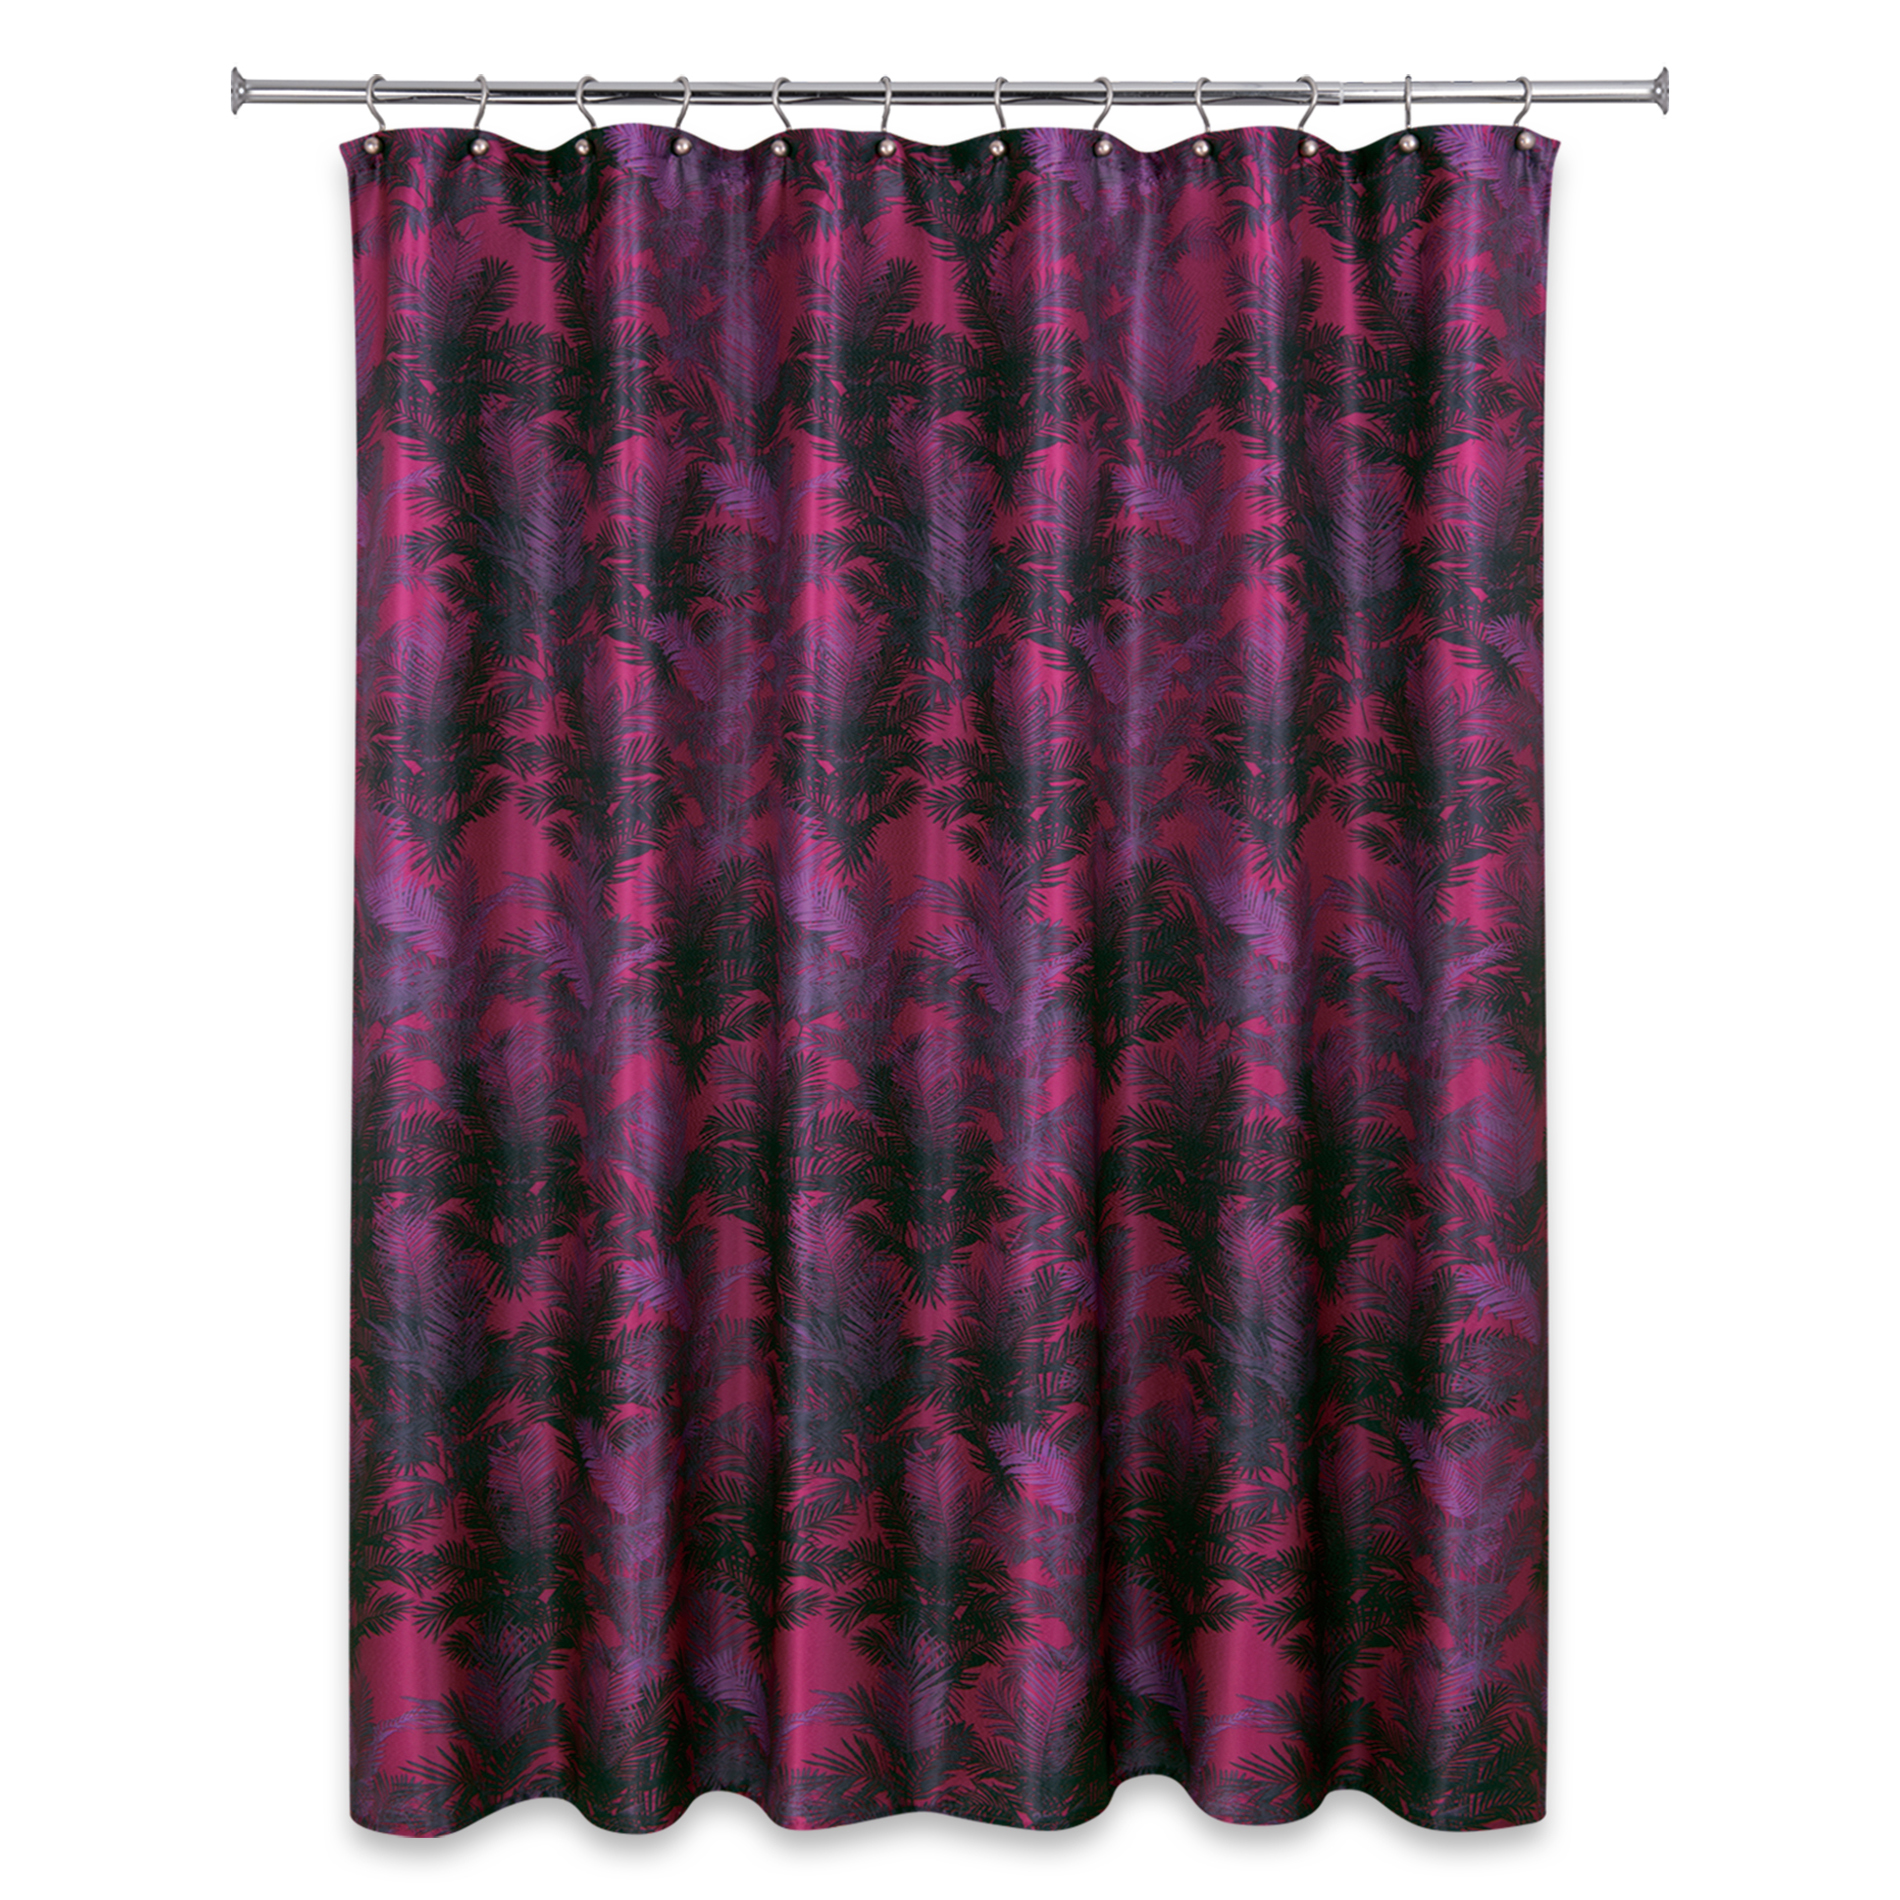 Essential Home 70" W x 72" L Shower Curtain - Magenta